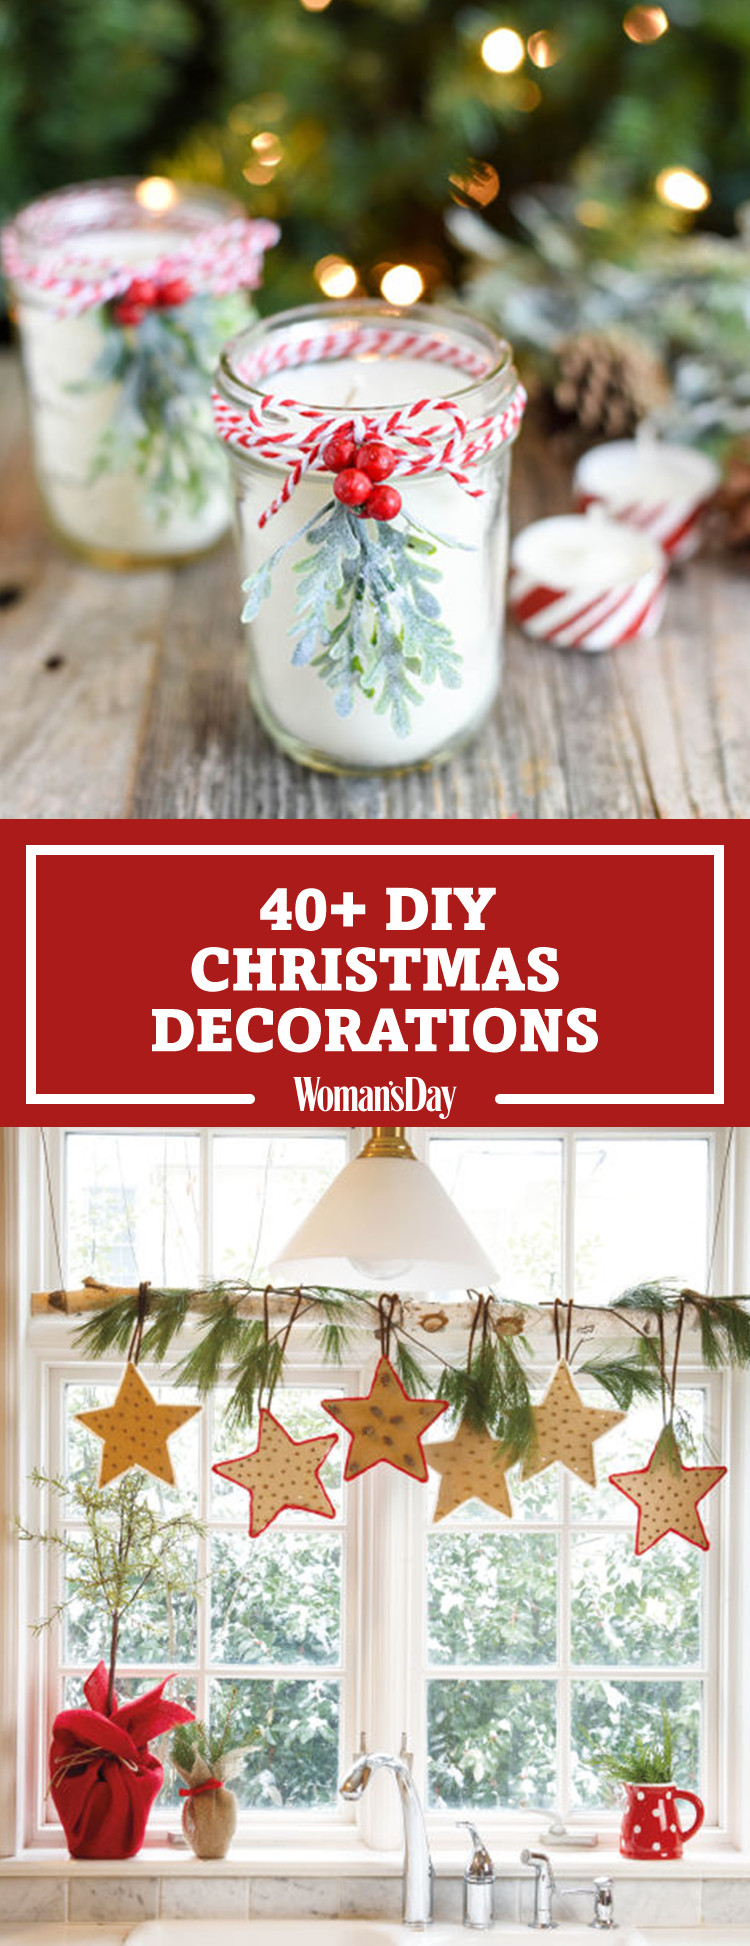 DIY Decorations For Christmas
 47 Easy DIY Christmas Decorations Homemade Ideas for